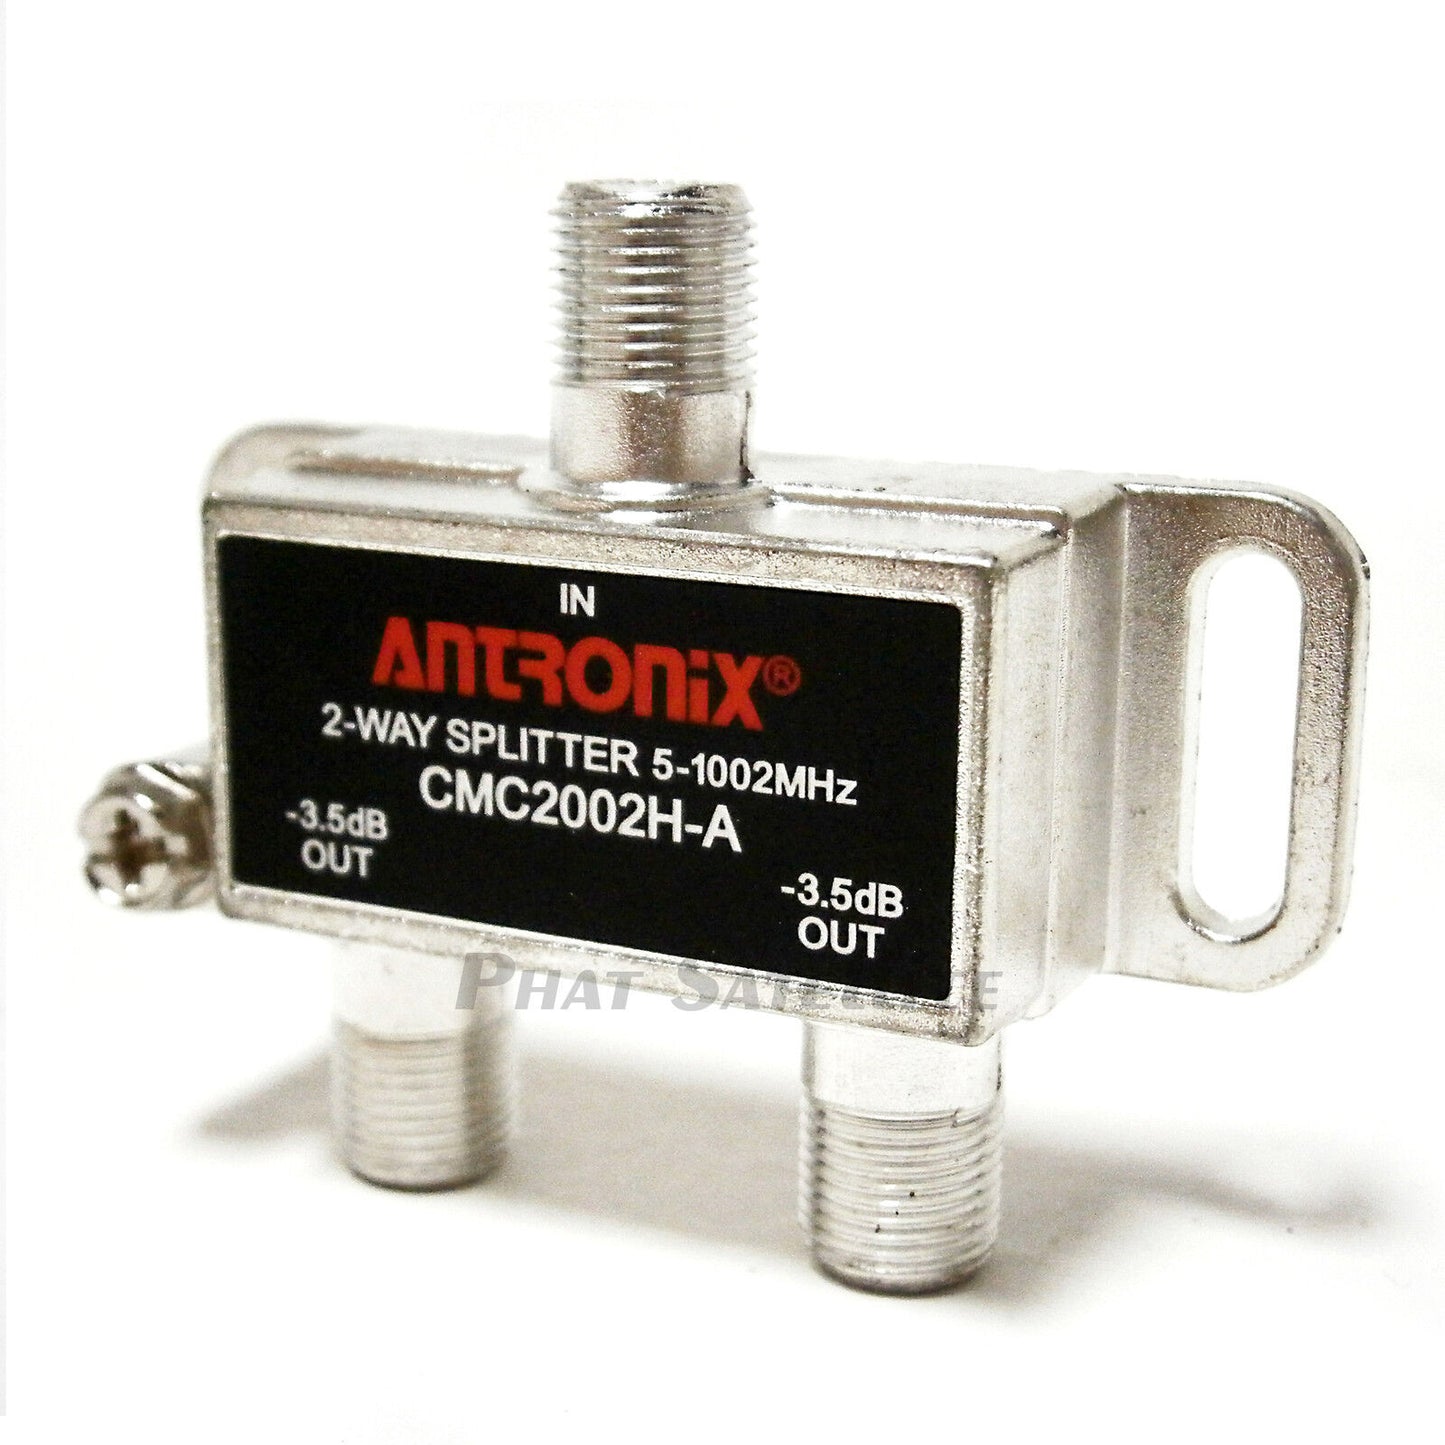 ANTRONIX CMC2000H-A 2-Way Horizontal Port Splitter 1 GHz 5-1002 MHZ MoCA Capable